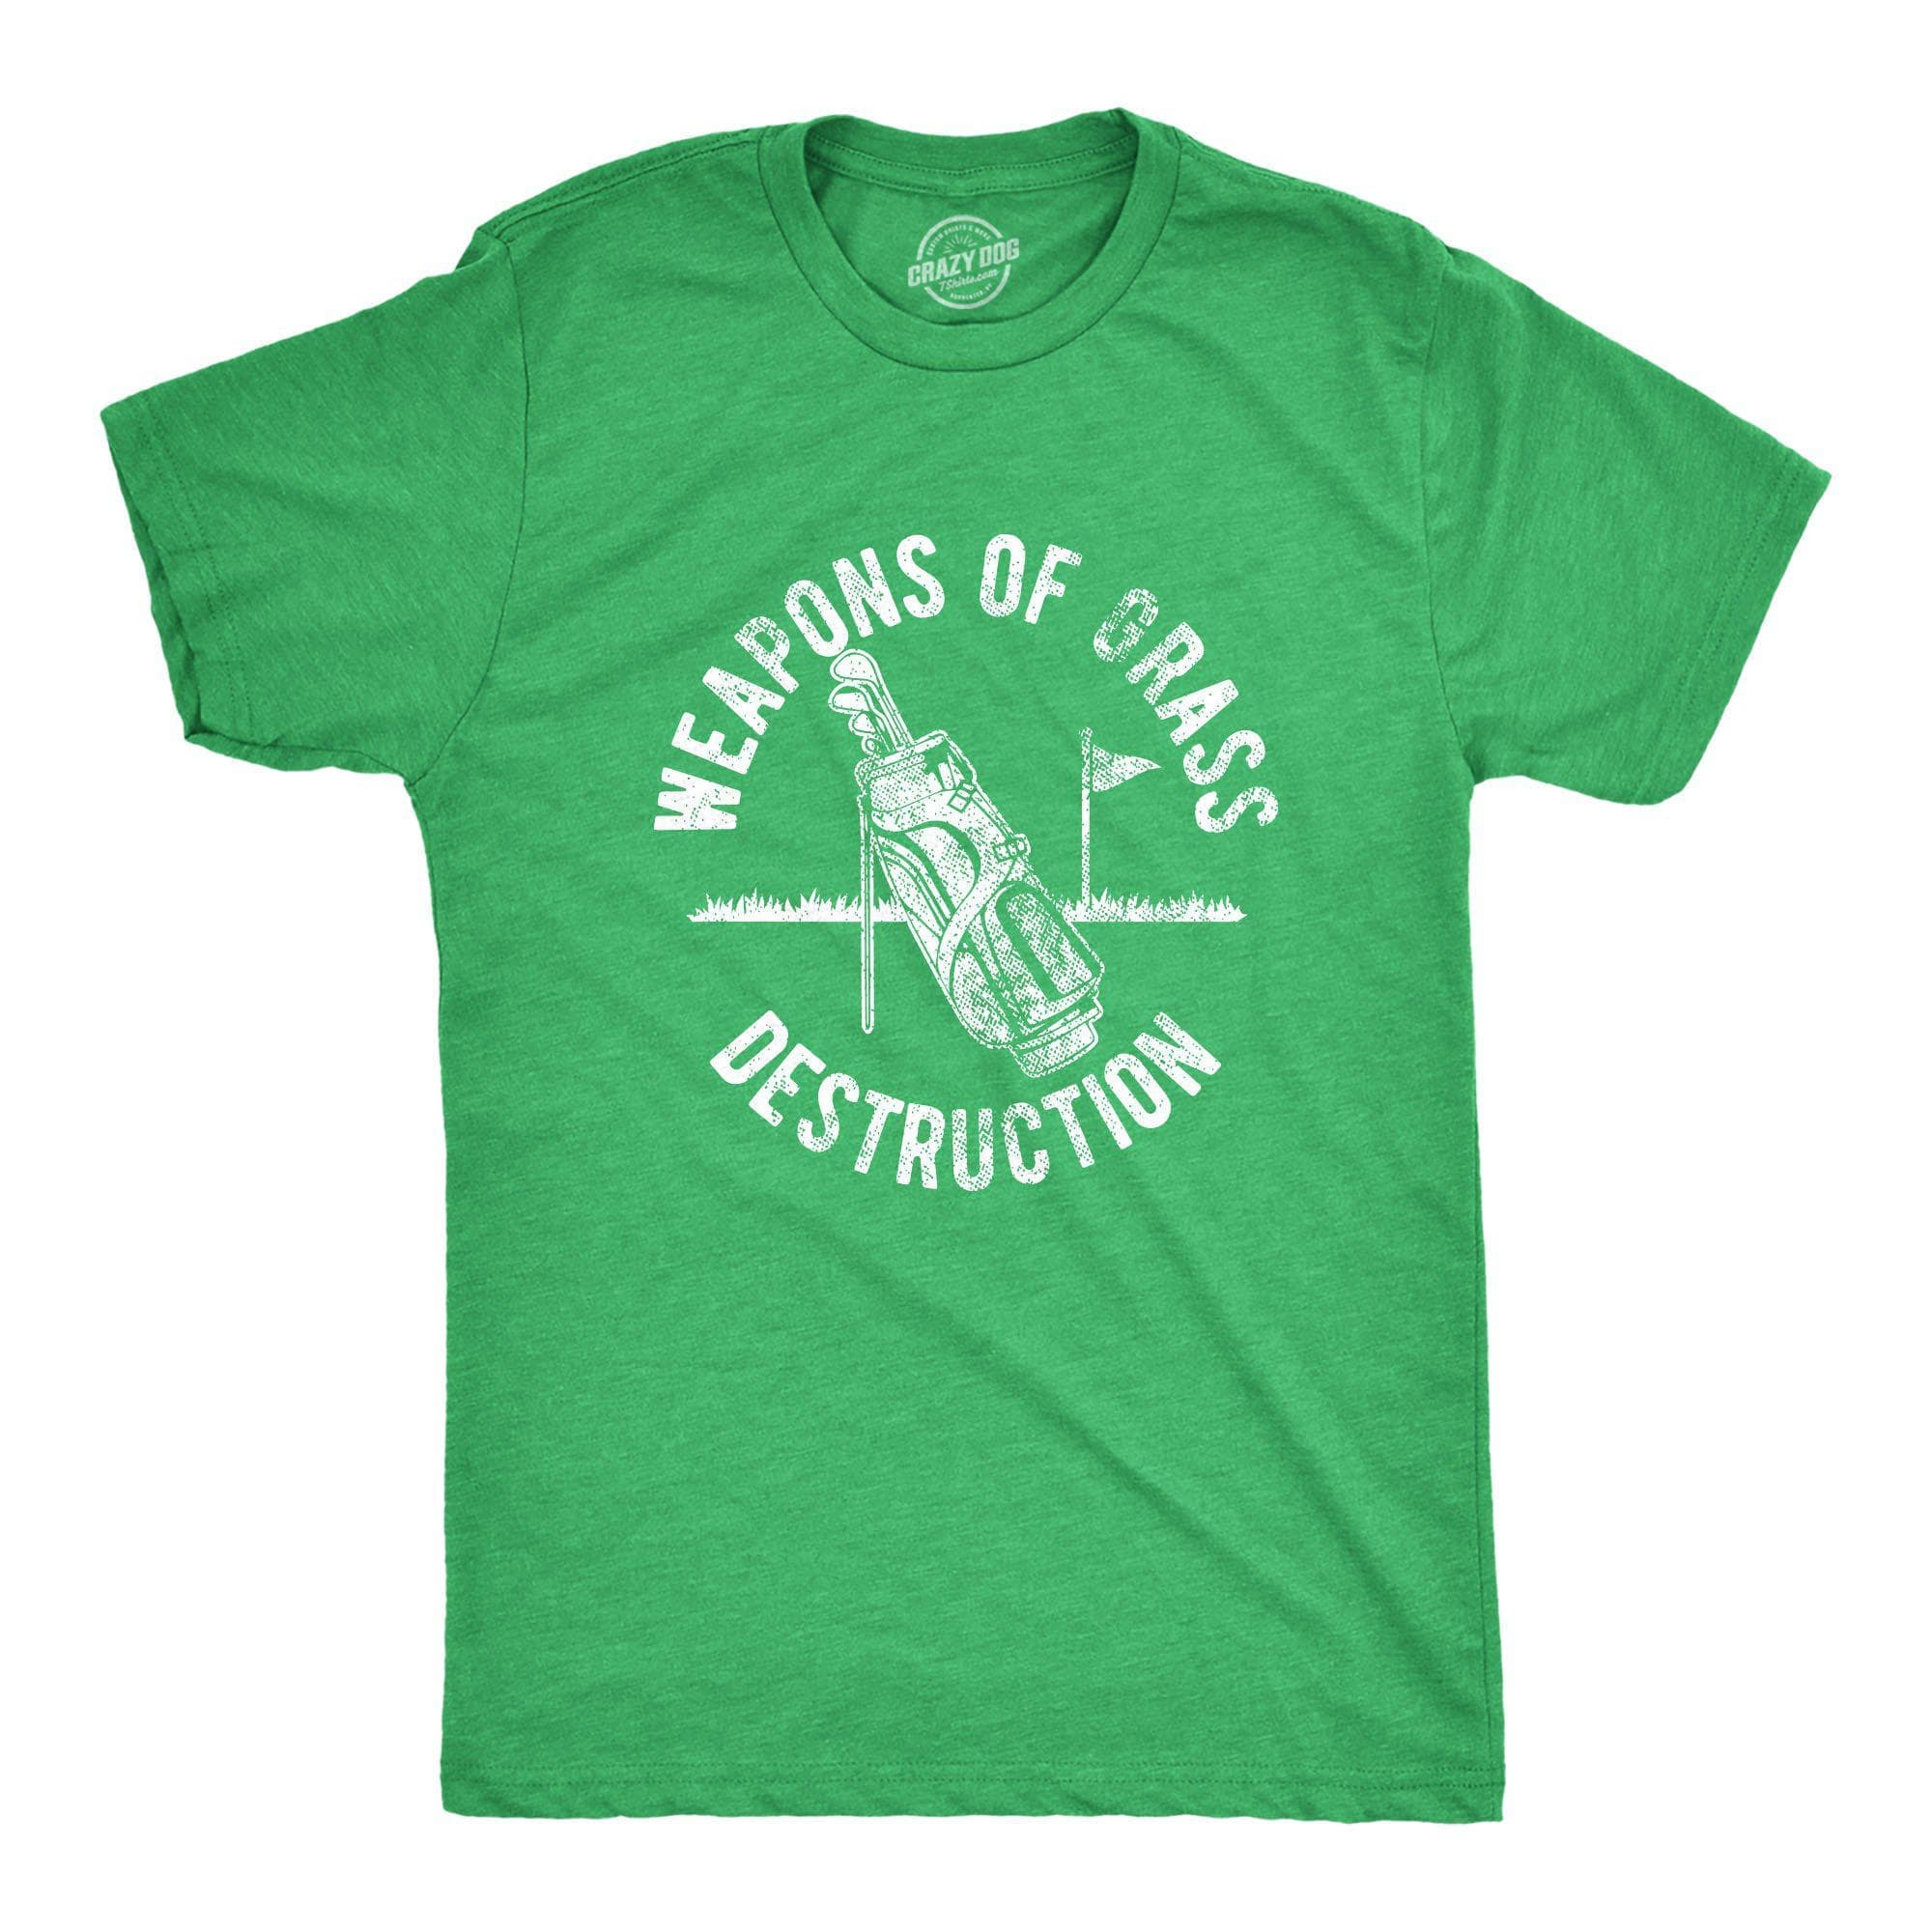 Weapons Of Grass Destruction Men's Tshirt - Crazy Dog T-Shirts